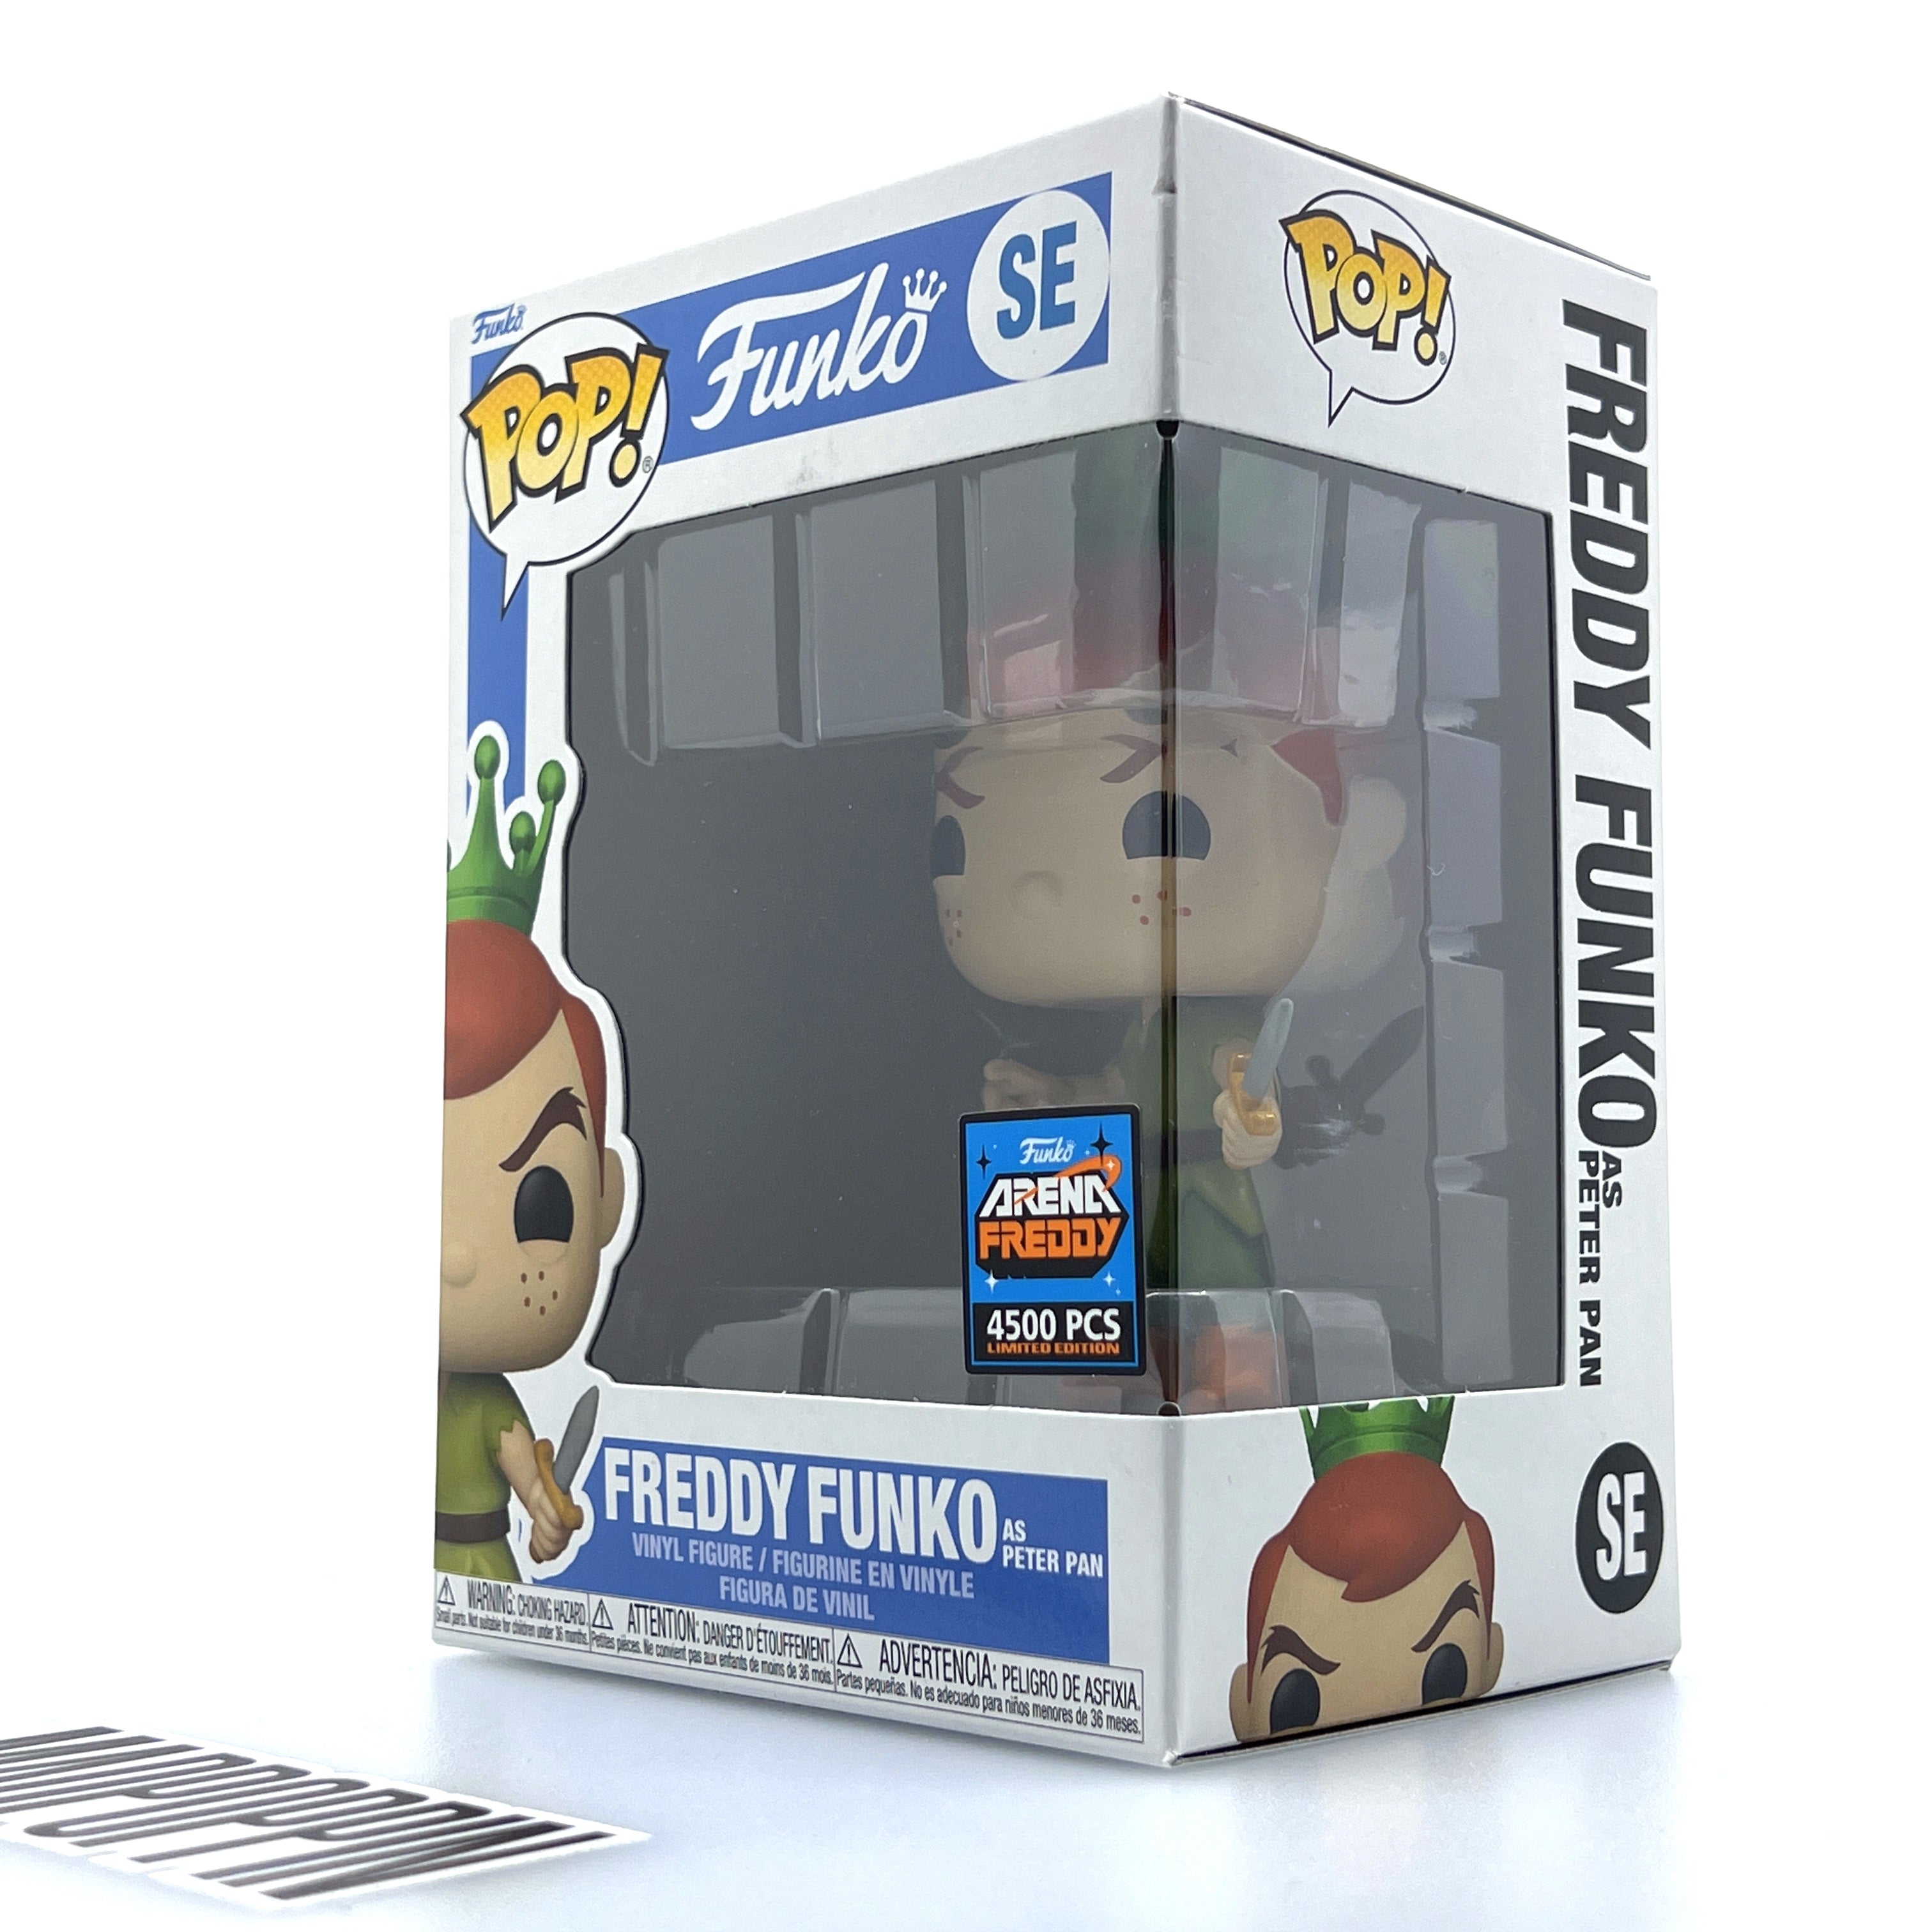 Funko Pop Arena Freddy Funko as Peter Pan Disney 70 Years LE 4500 Pcs SE